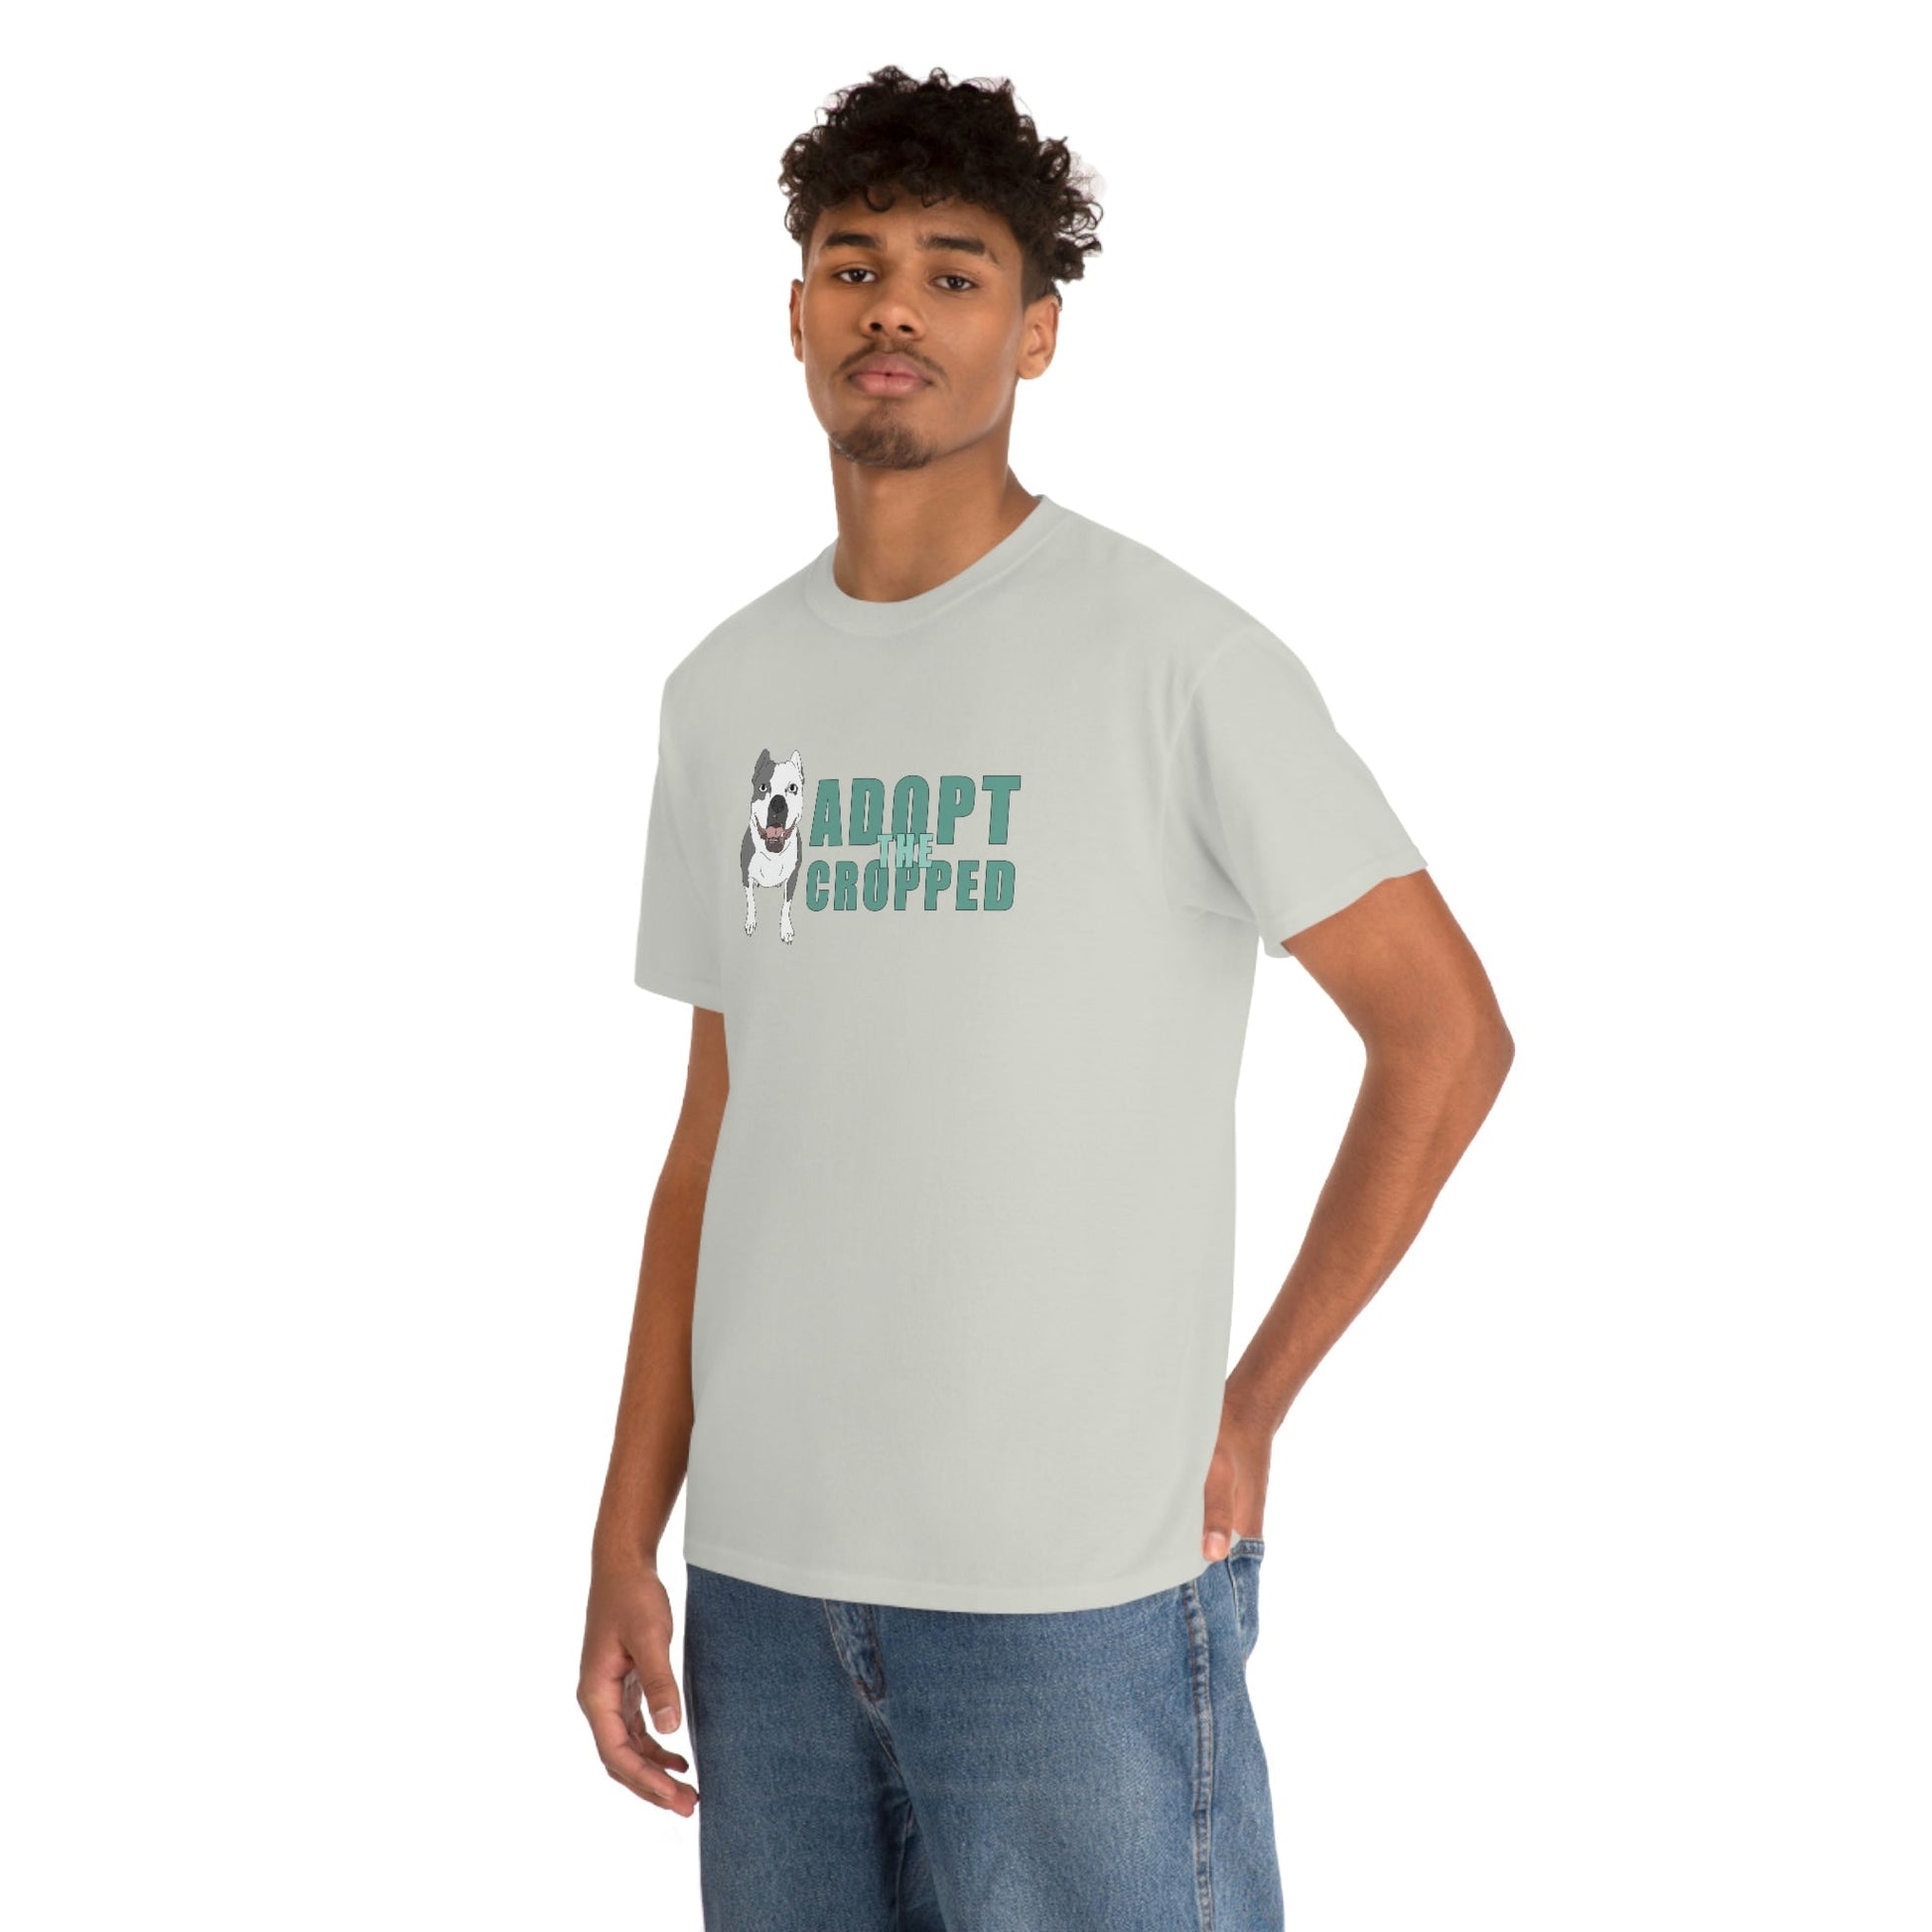 Adopt The Cropped | T-shirt - Detezi Designs-78023861692516238475